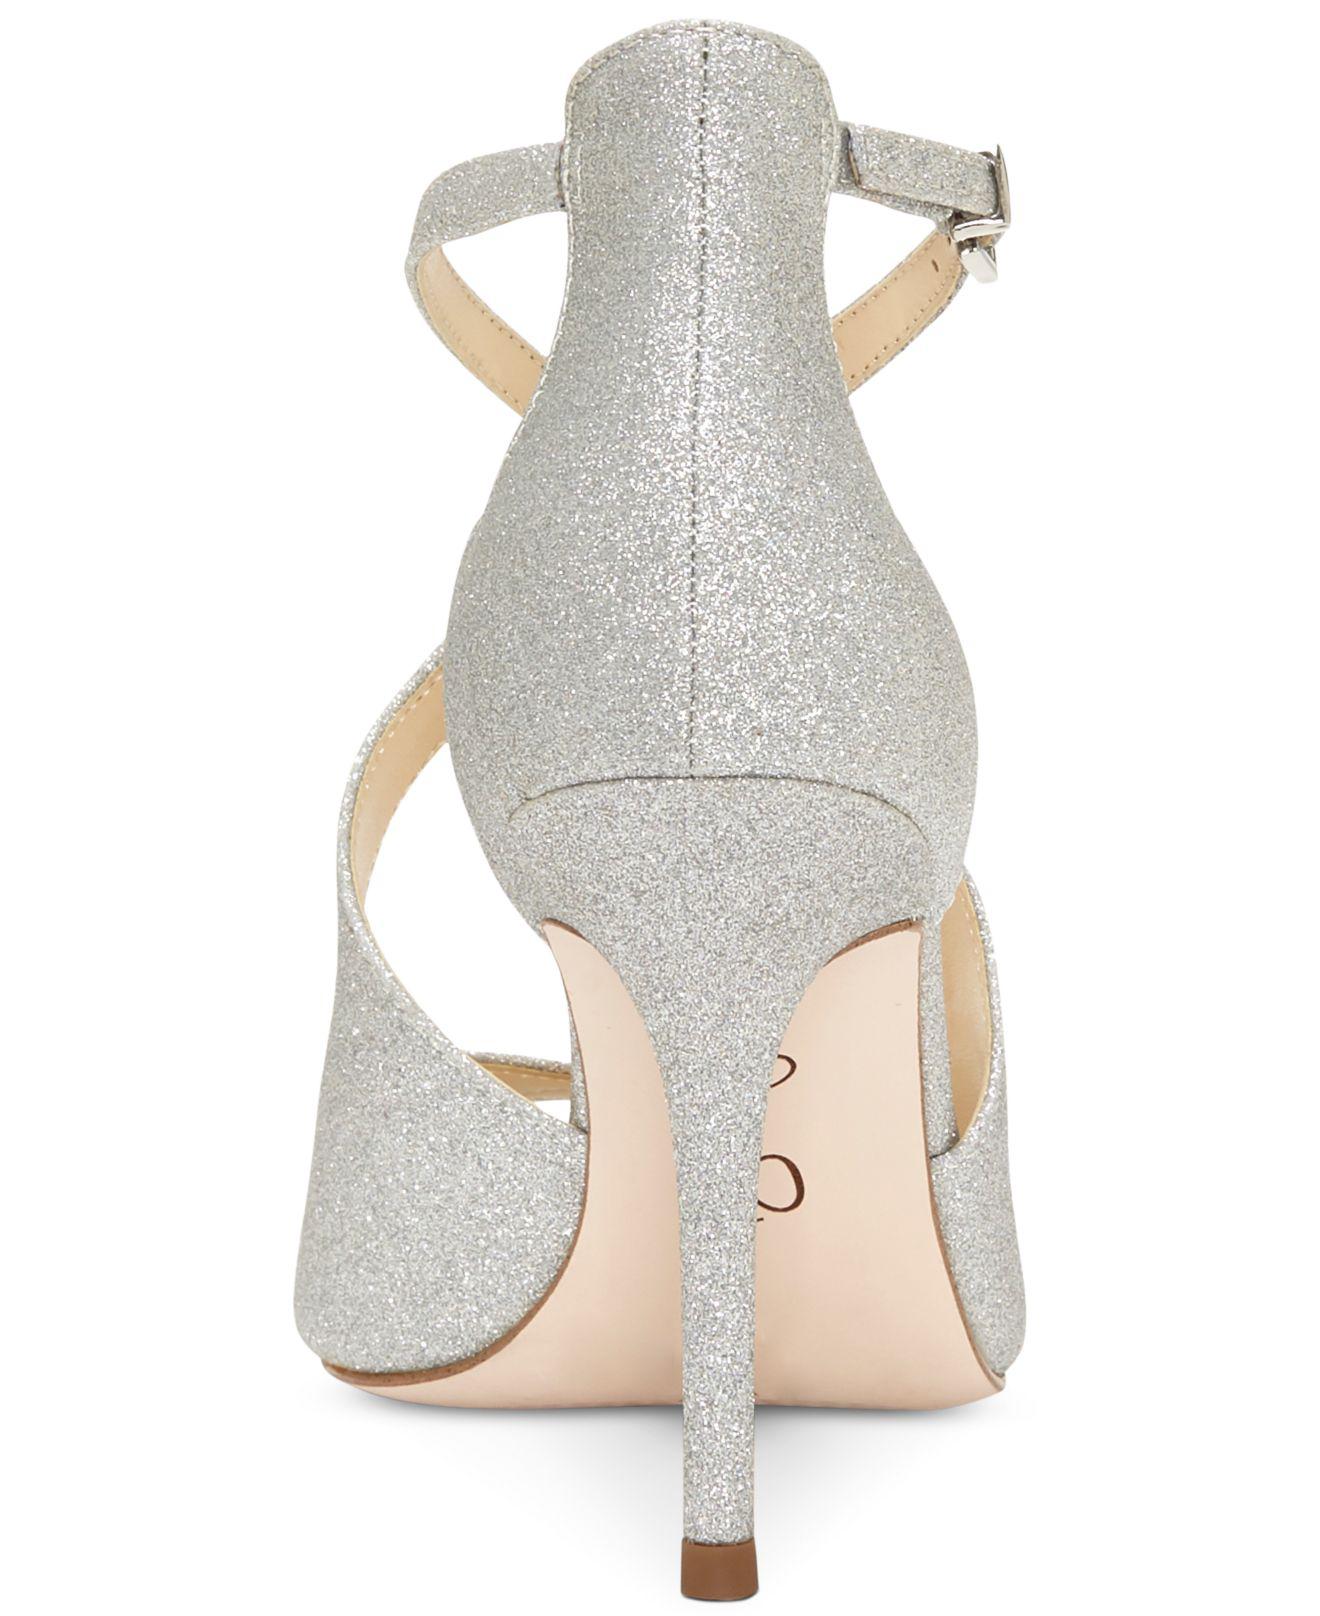 Jessica Simpson Averie Dress Sandals in Silver (Metallic) - Lyst